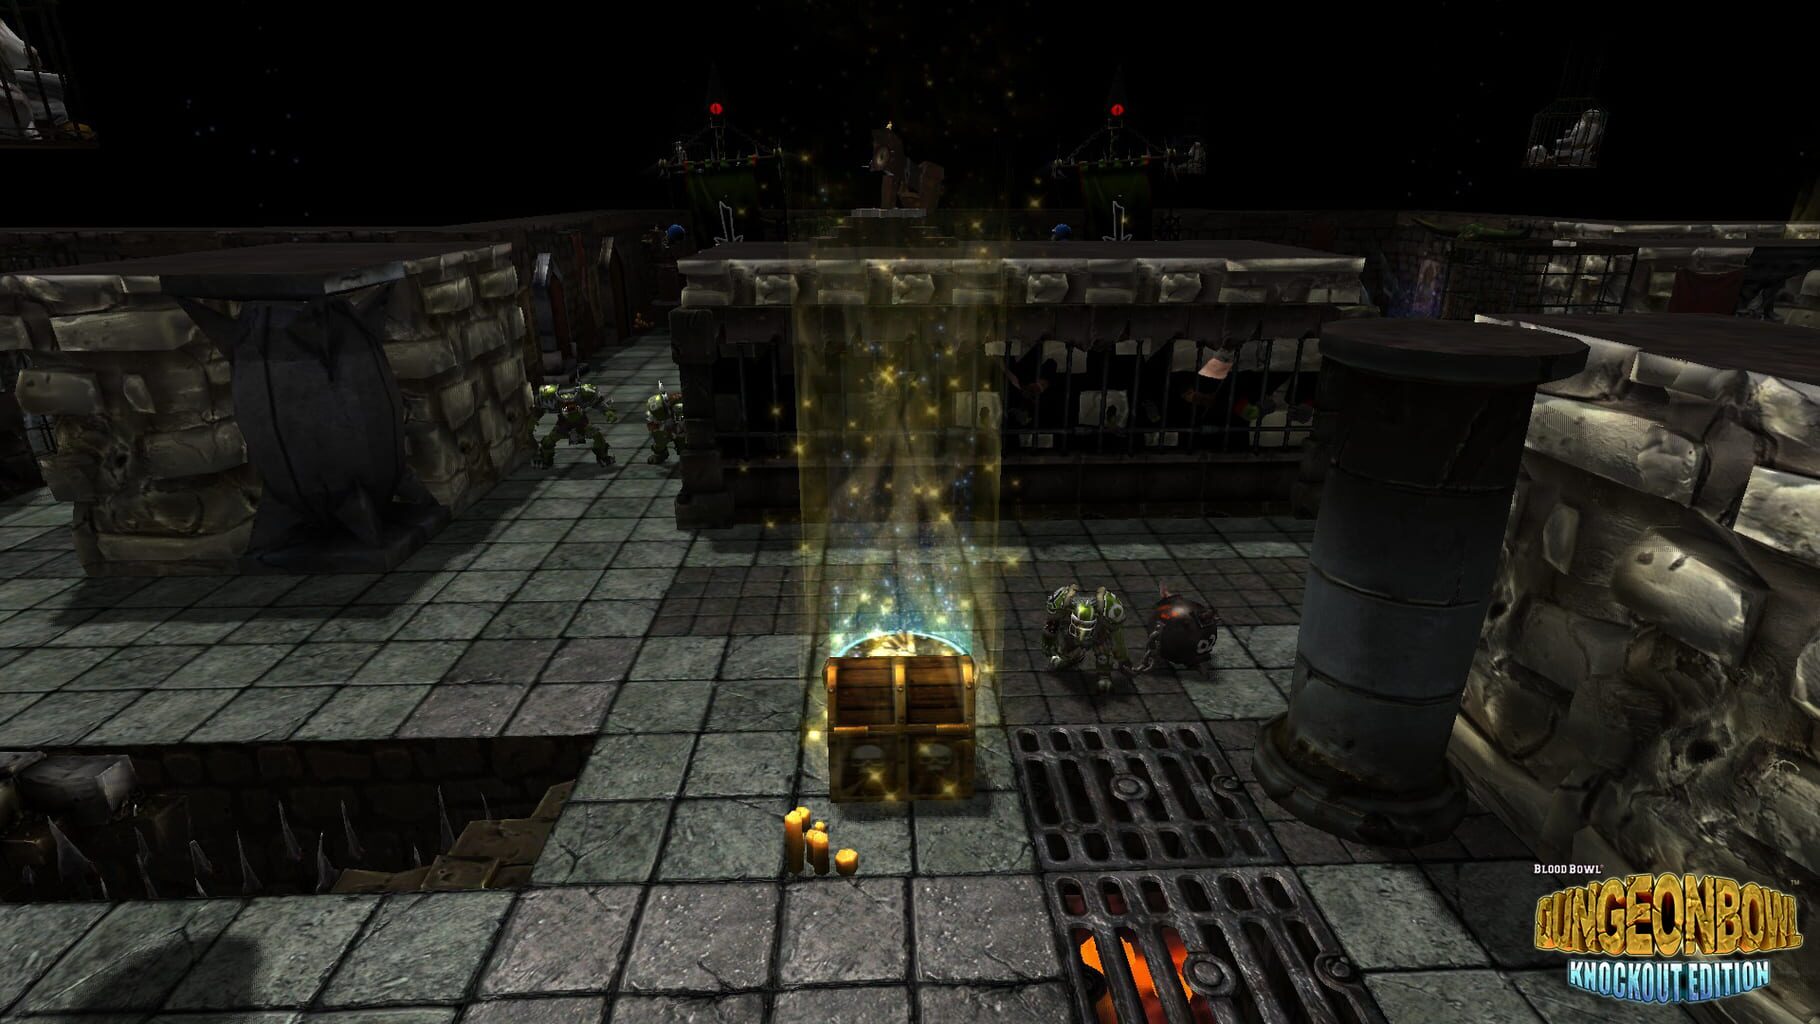 Captura de pantalla - Dungeonbowl: Knockout Edition